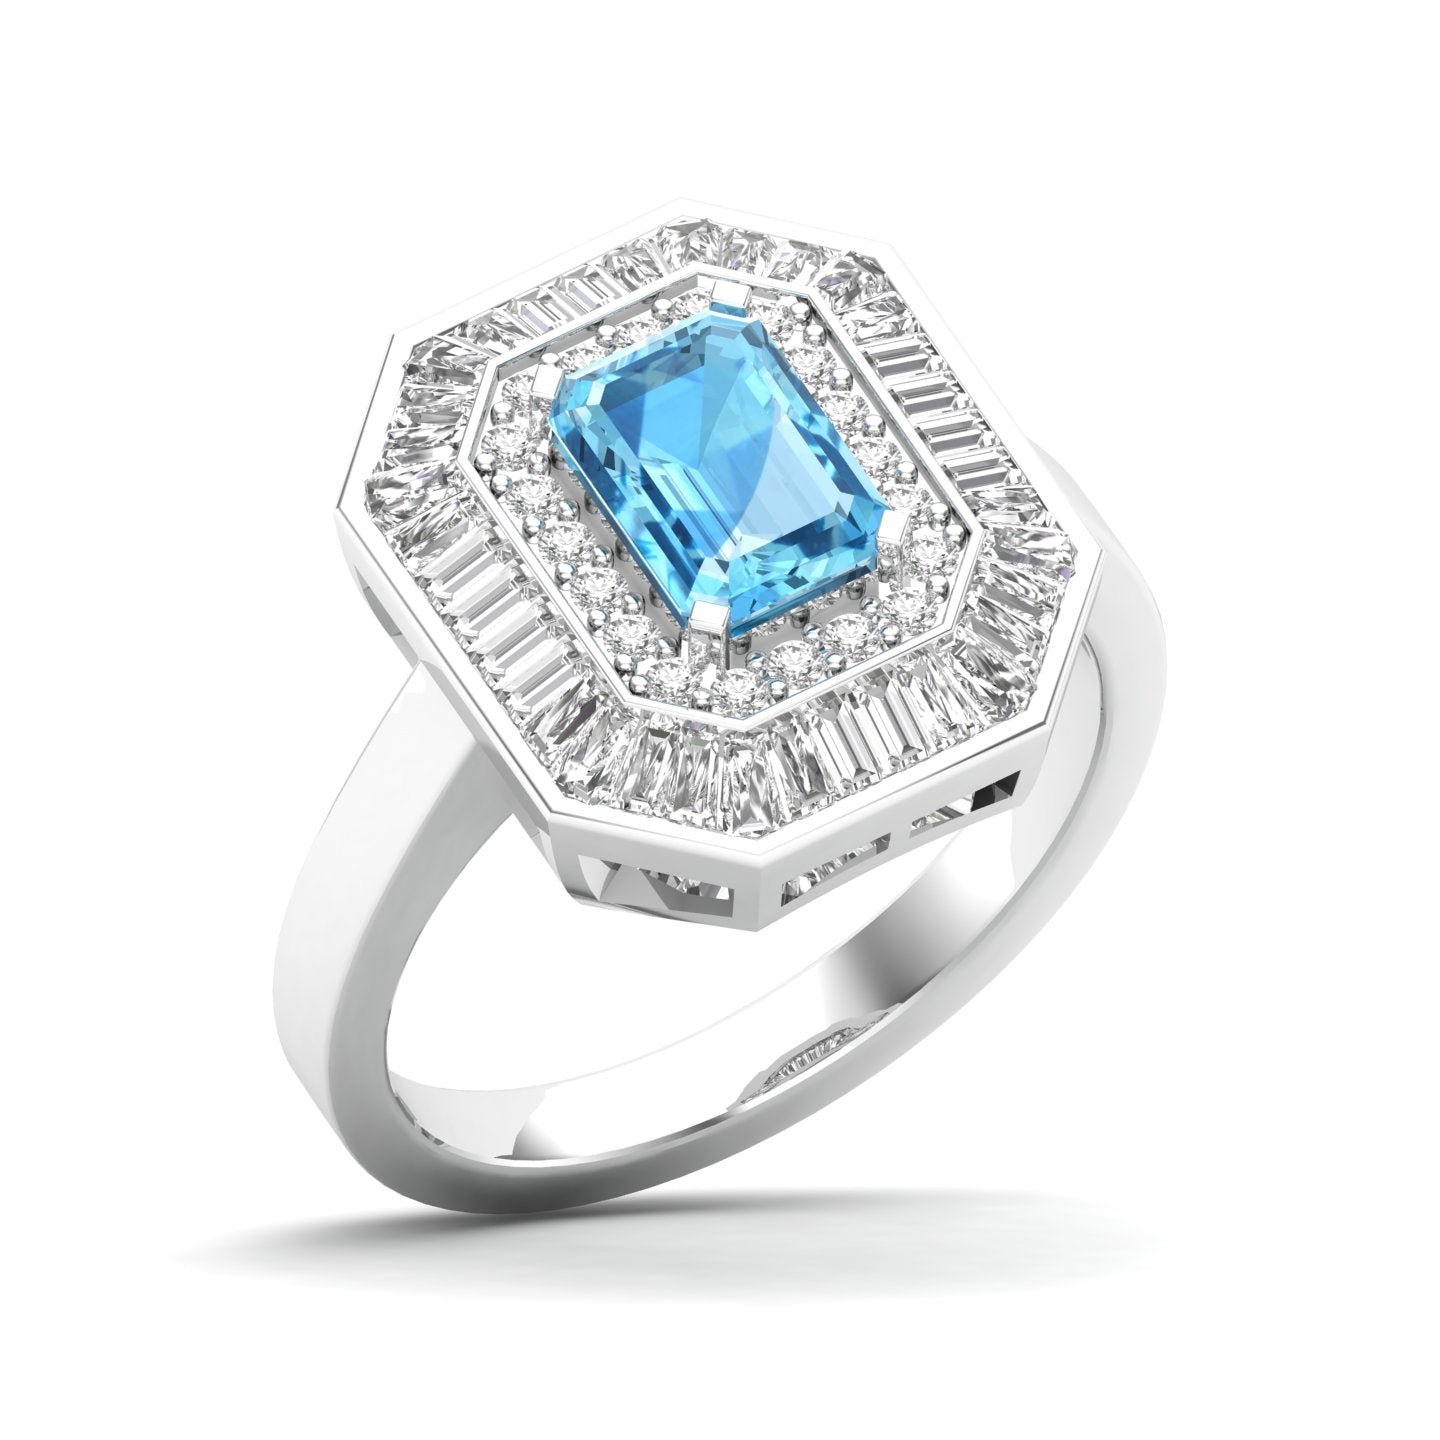 Maurya Recherche Octagon Ruby Engagement Ring with Diamond Halo